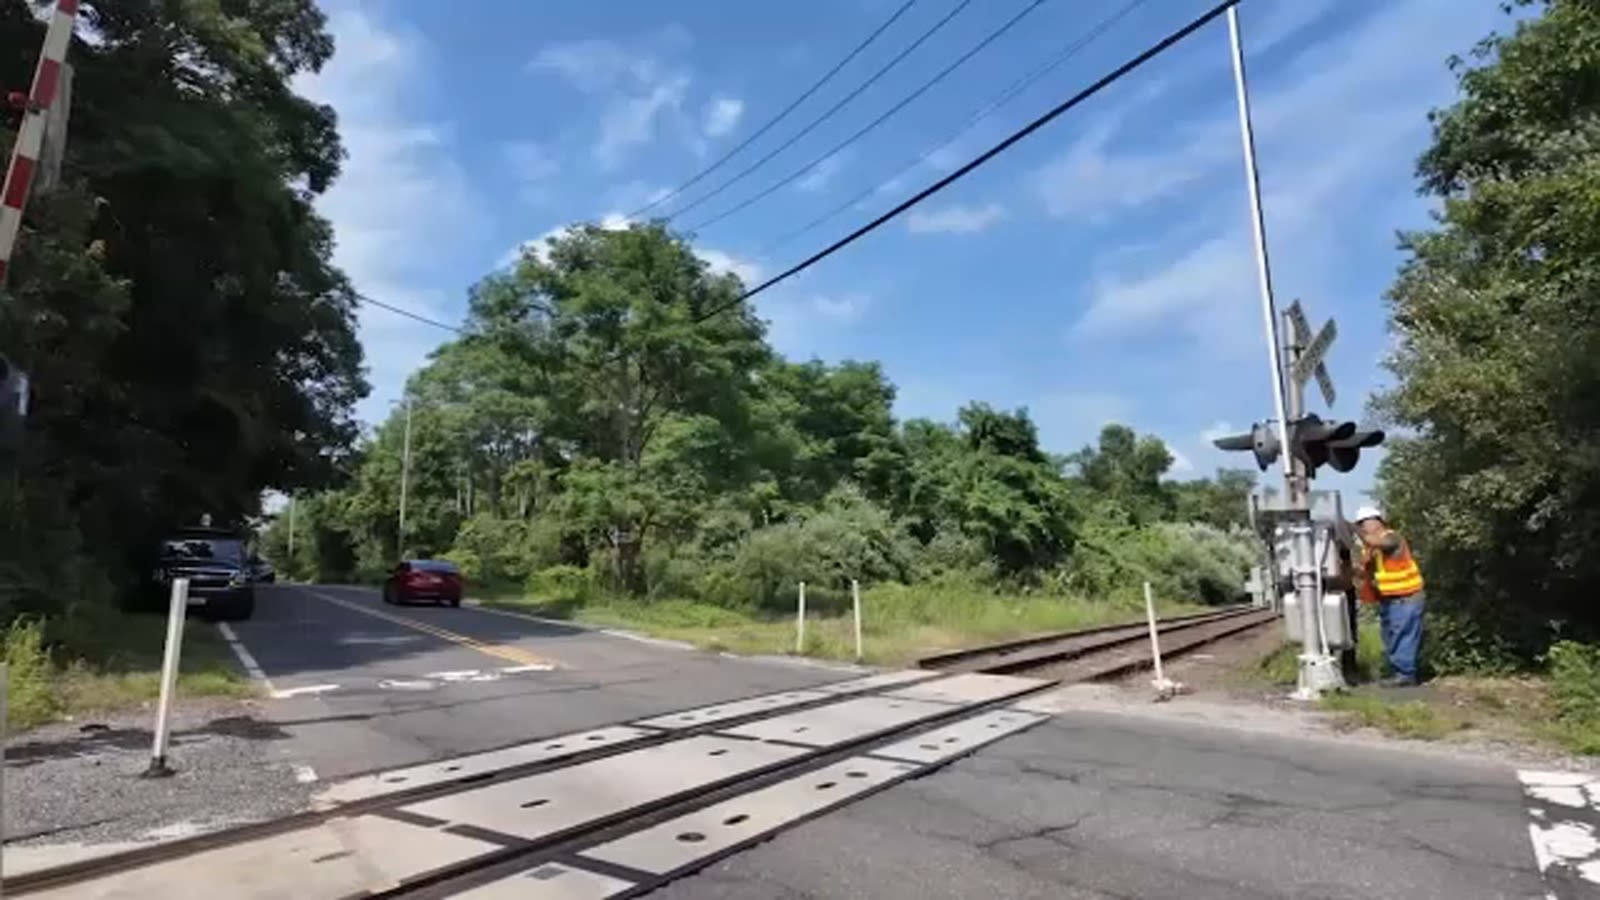 Train strikes taxi killing driver, injuring passenger on Long Island